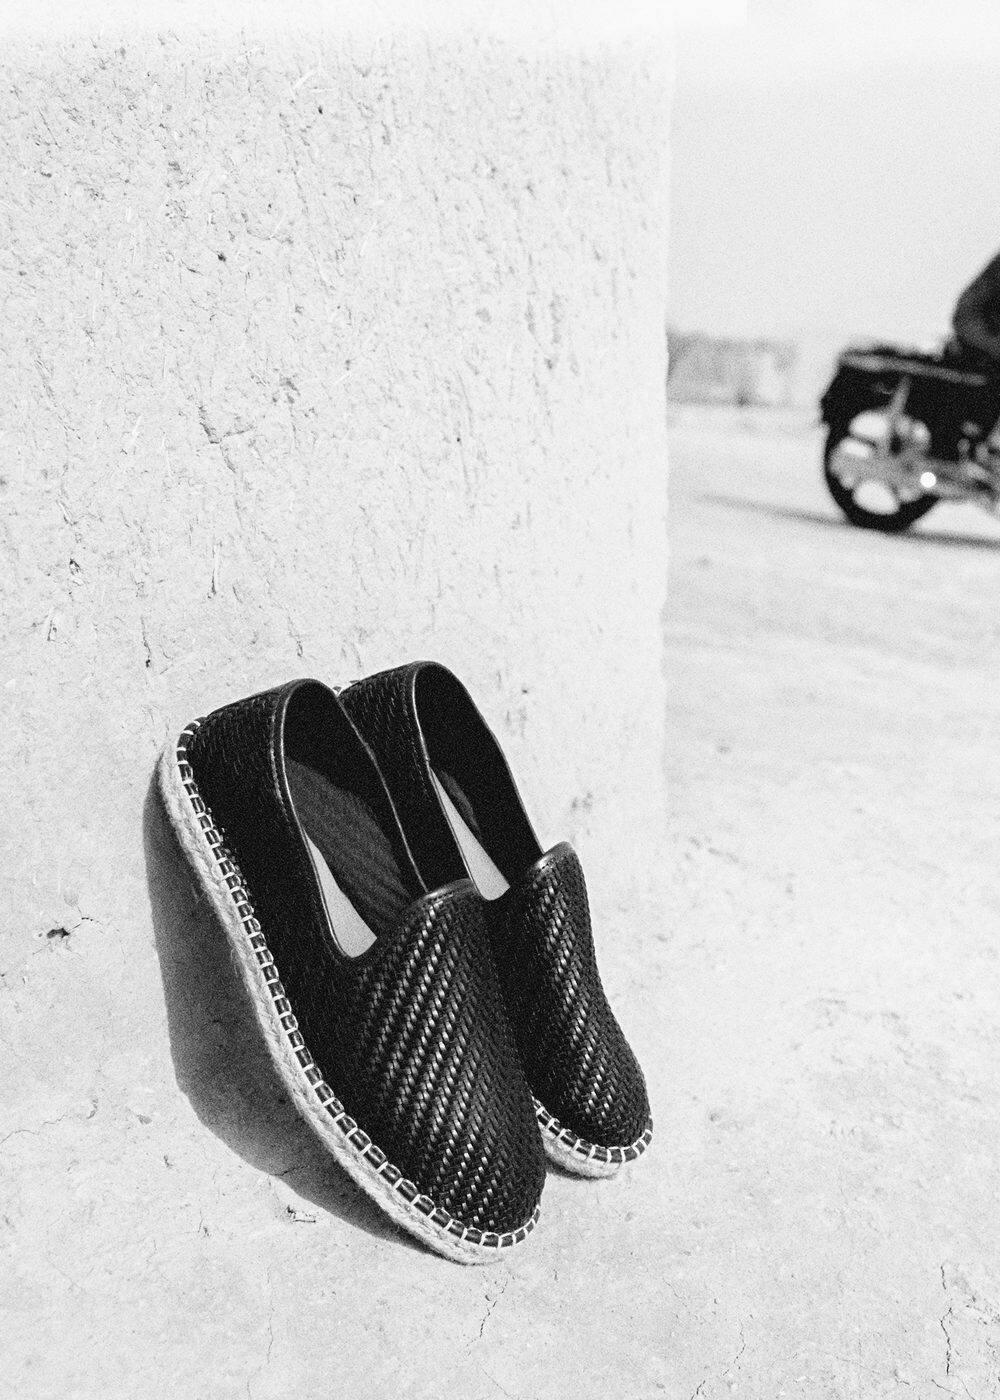 Aquatalia Qaitlin Moc Toe Slip-On Shoe Product Image